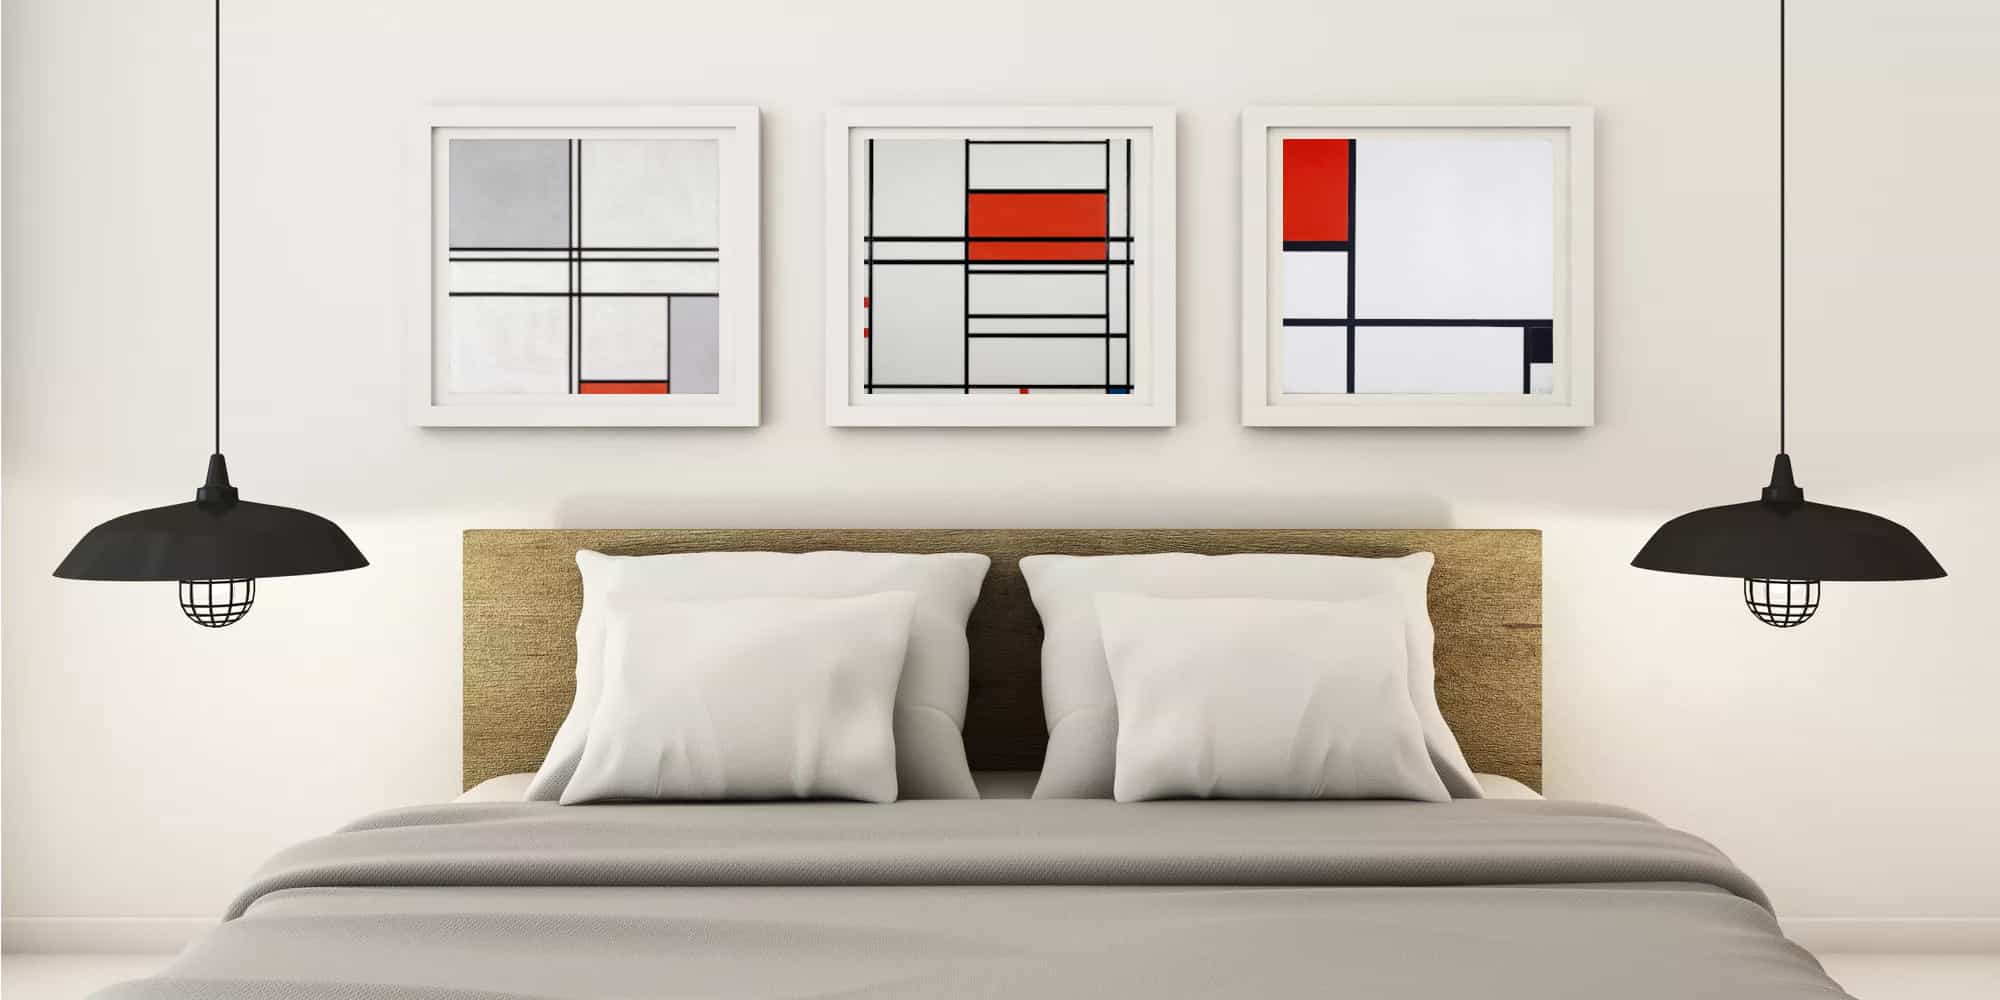 Piet Mondrian, Neo-Plasticism Master